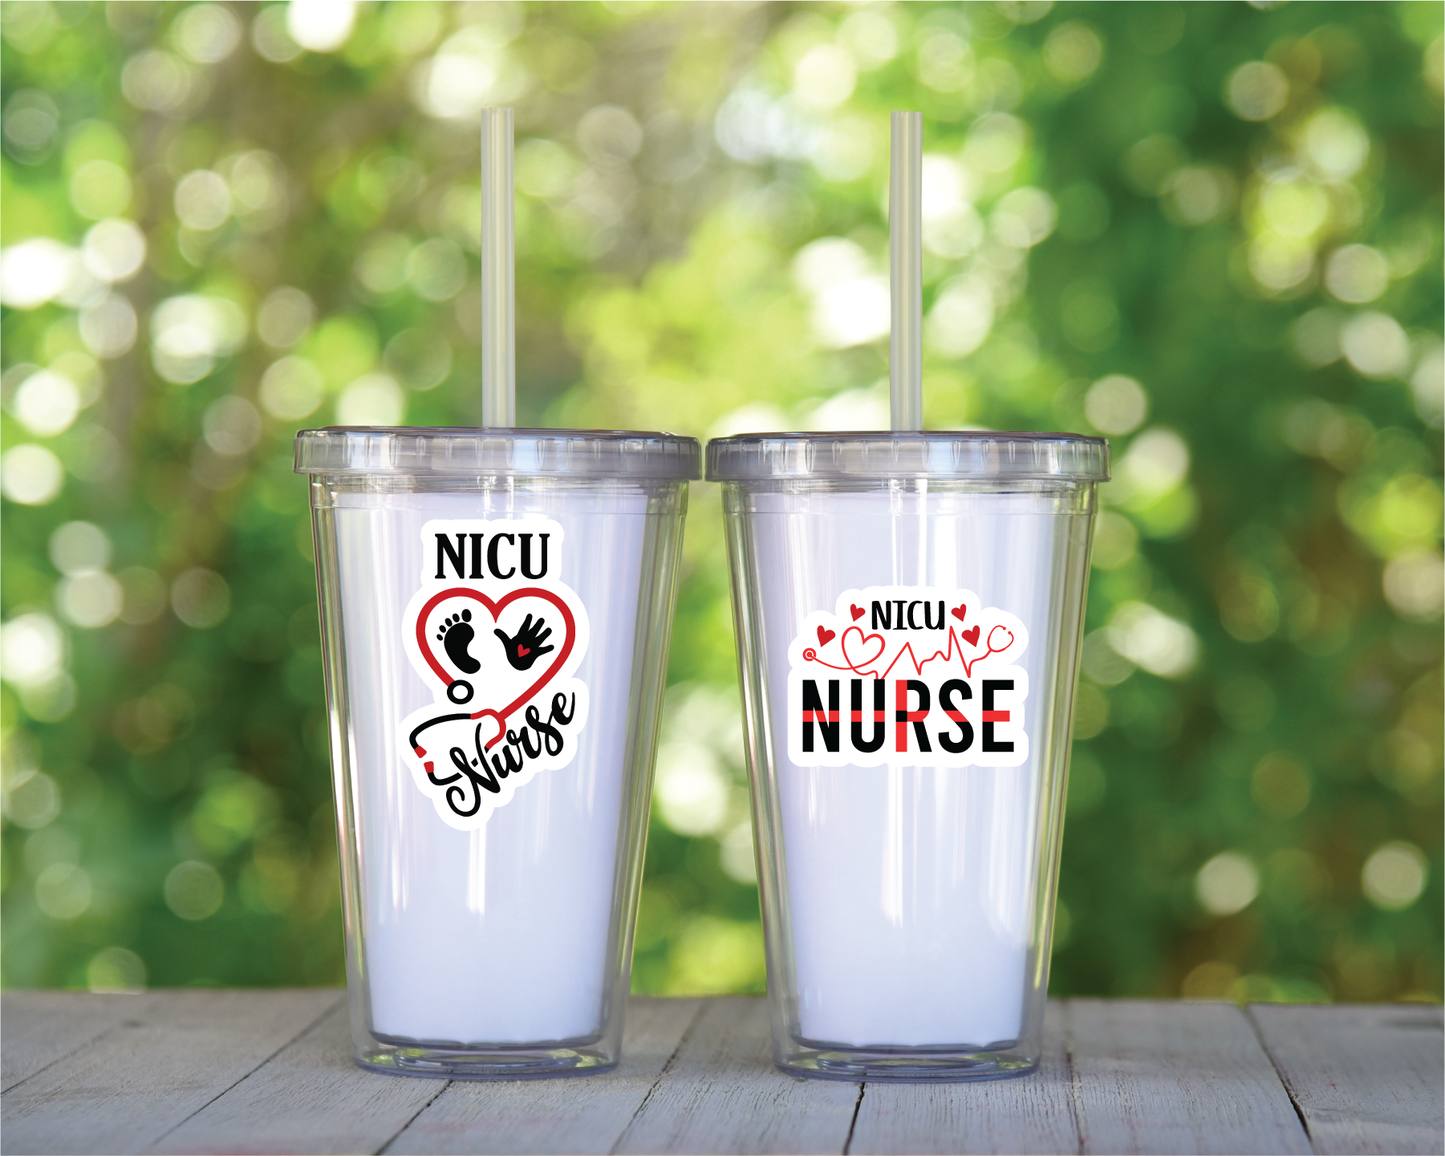 NICU Nurses 2 - Full Color Vinyl Stickers (SHIPS IN 3-7 BUS DAYS)